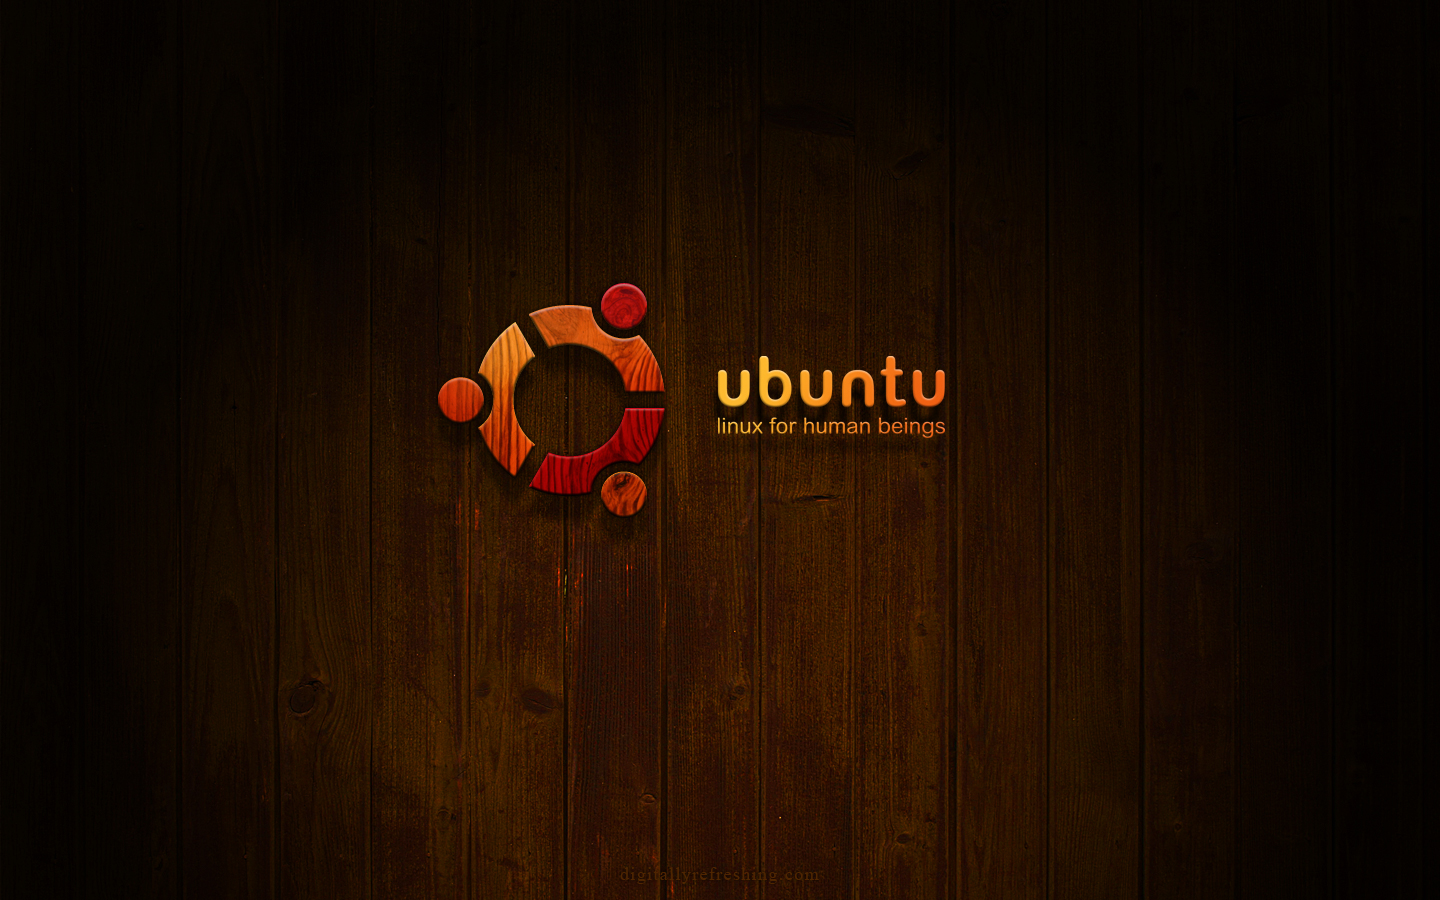  Ubuntu wolpeyper